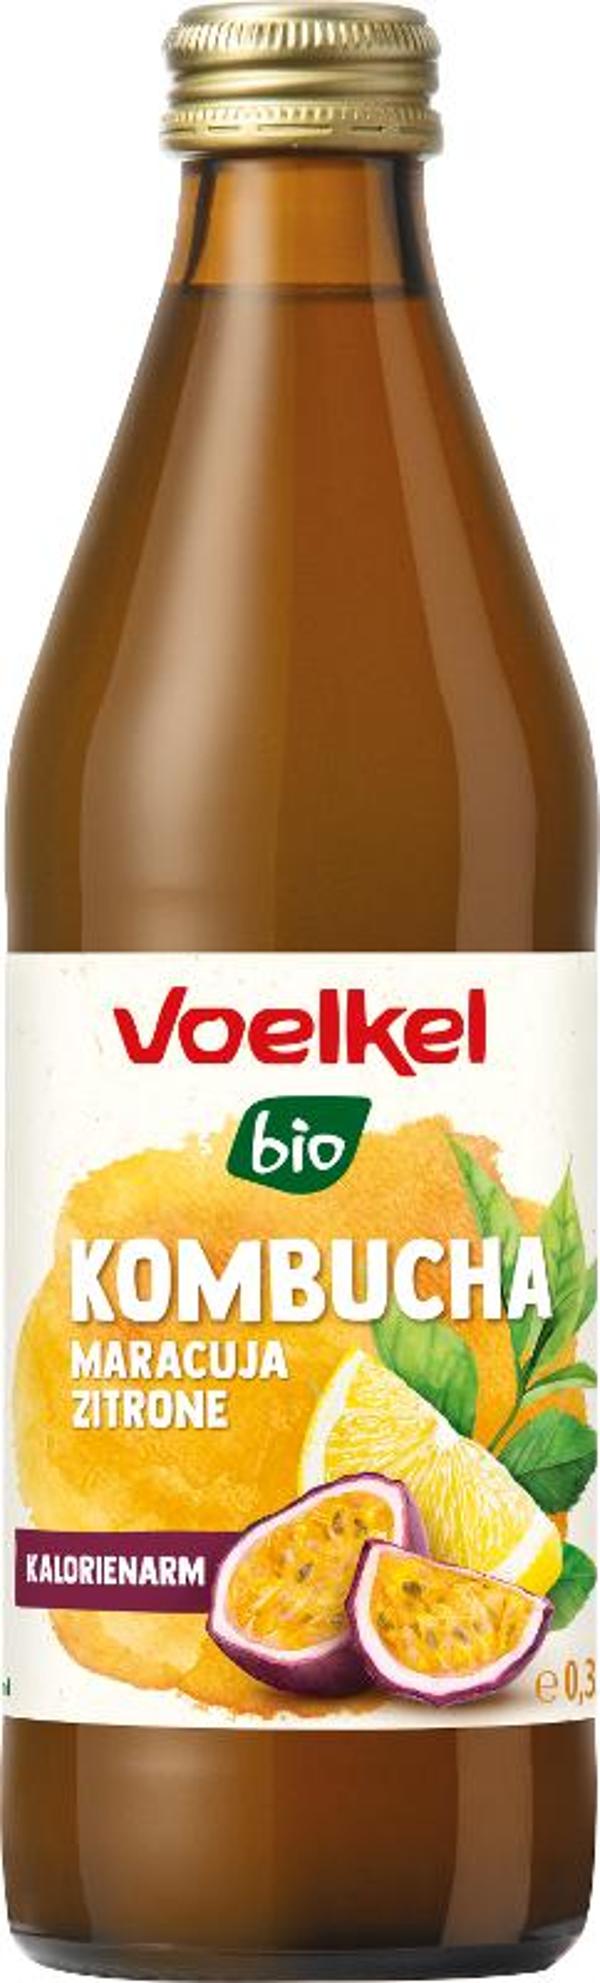 Produktfoto zu Kombucha Maracuja & Zitrone